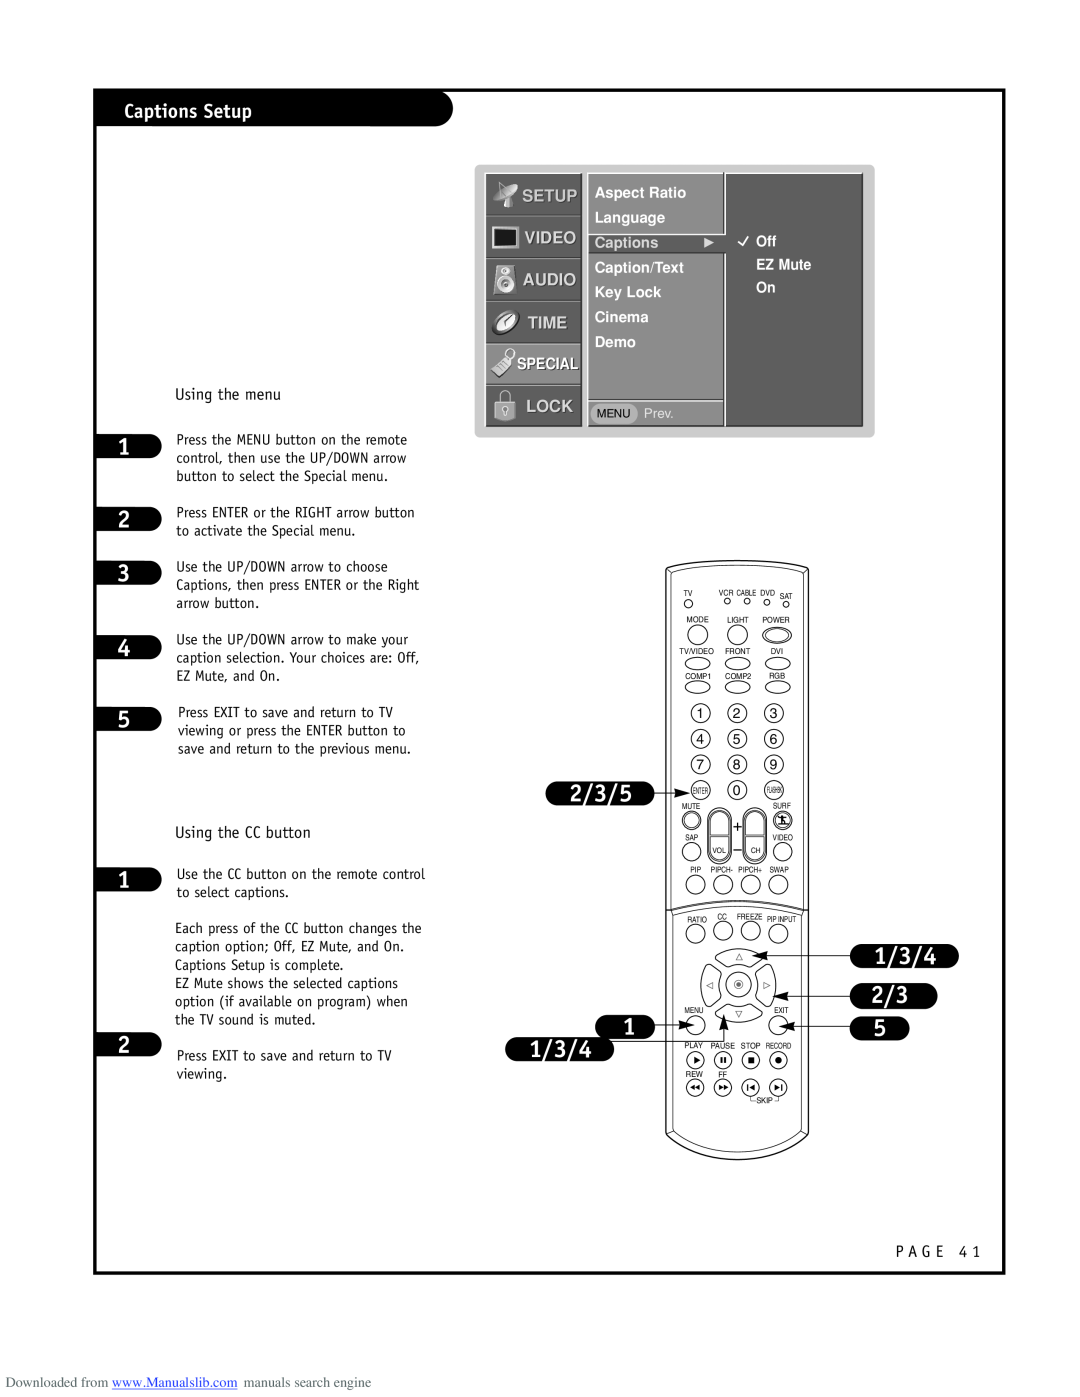 LG Electronics RU-52SZ53D Captions Setup, 2/3/5, 1/3/4 2/3, Video Audio Time, Lock, Special, Aspect Ratio Language 